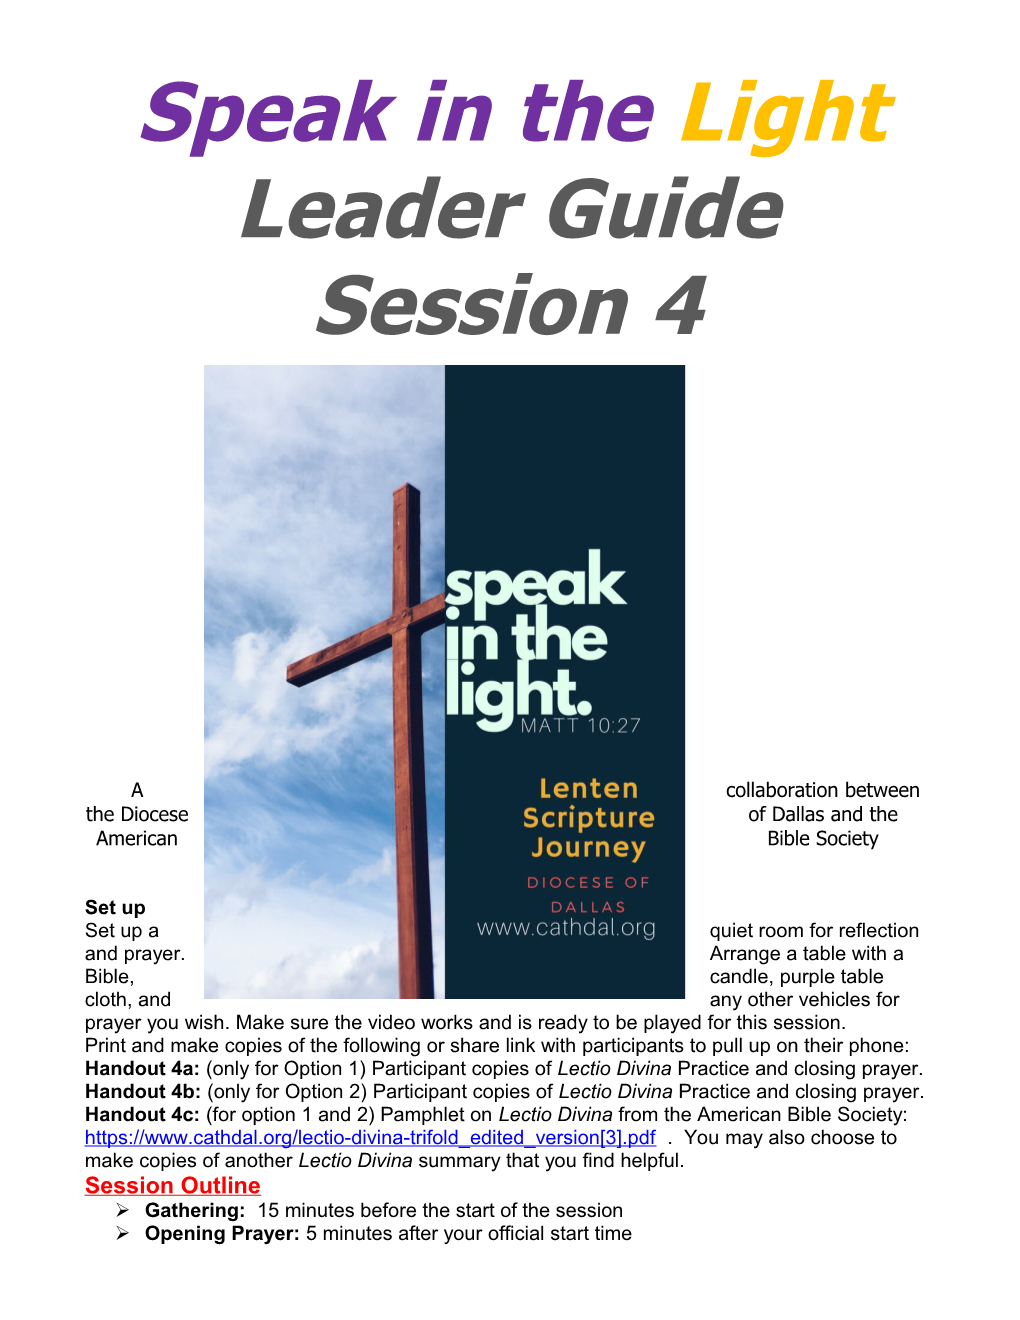 Speak in the Light Leader Guide Session 4: Lectio Divina